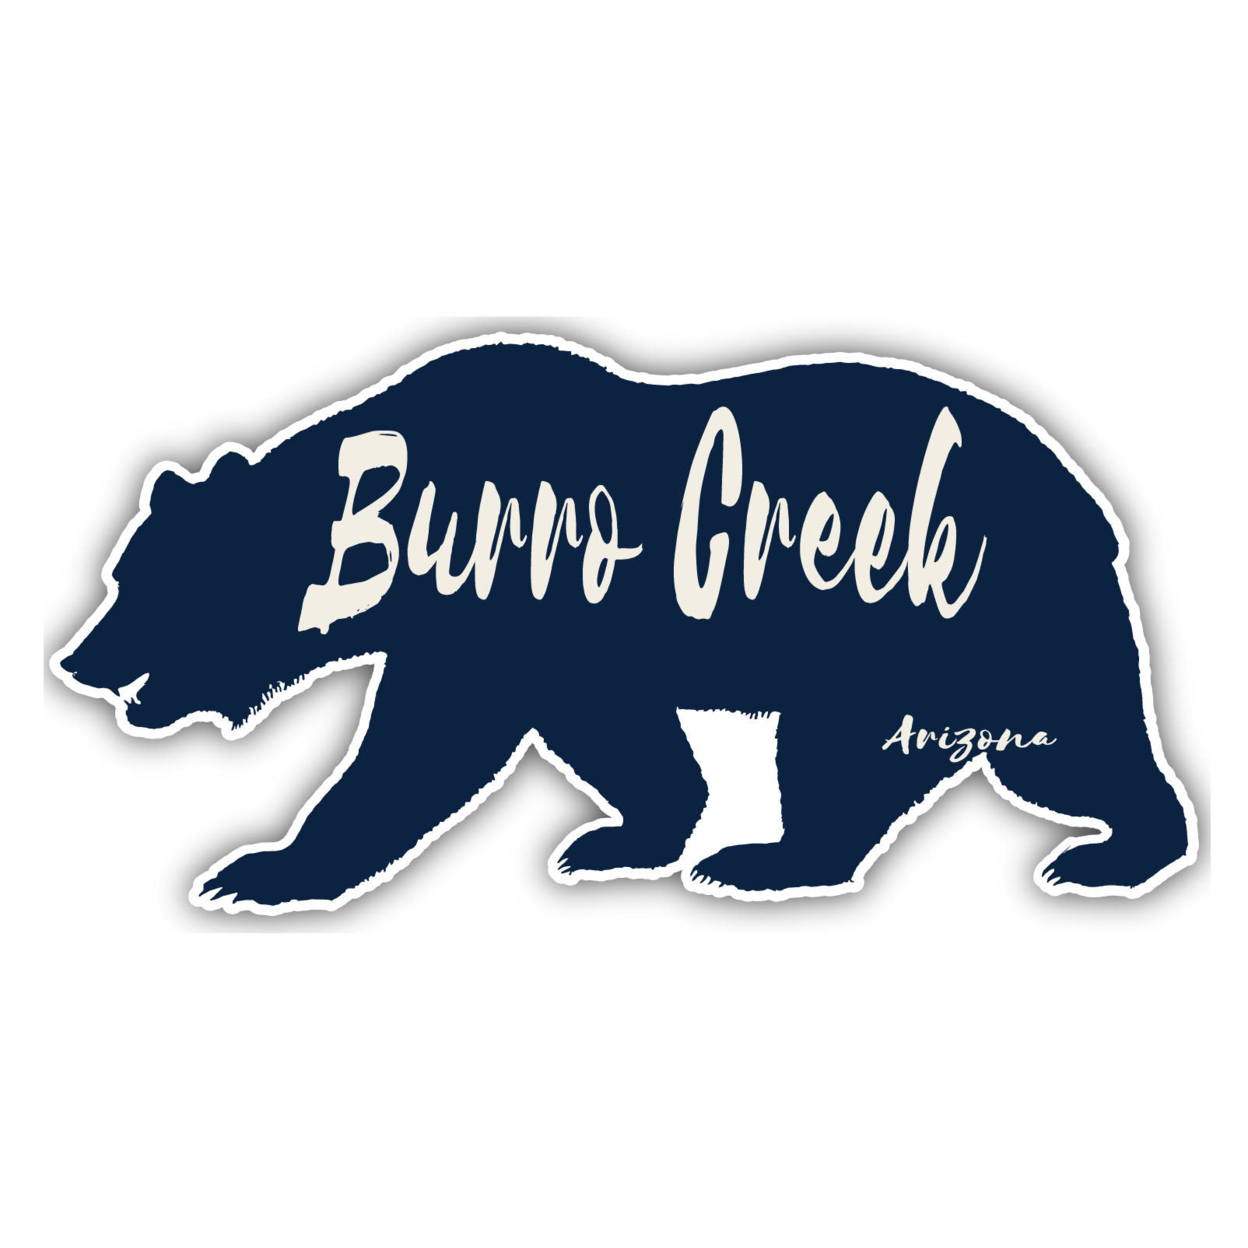 Burro Creek Arizona Souvenir Decorative Stickers (Choose Theme And Size) - Single Unit, 4-Inch, Bear